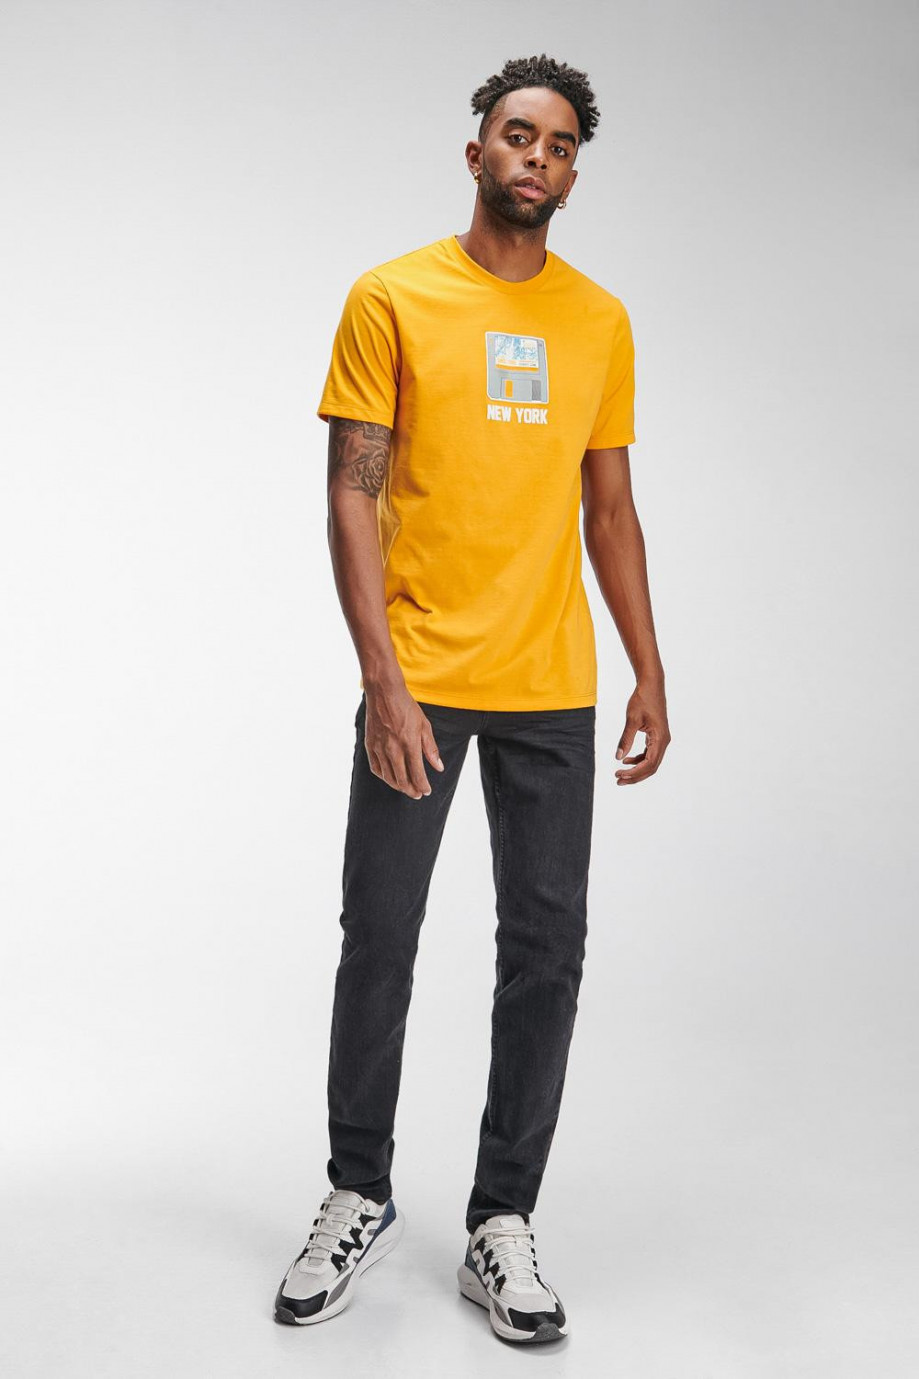 Camiseta manga corta amarilla oscura con estampado delantero